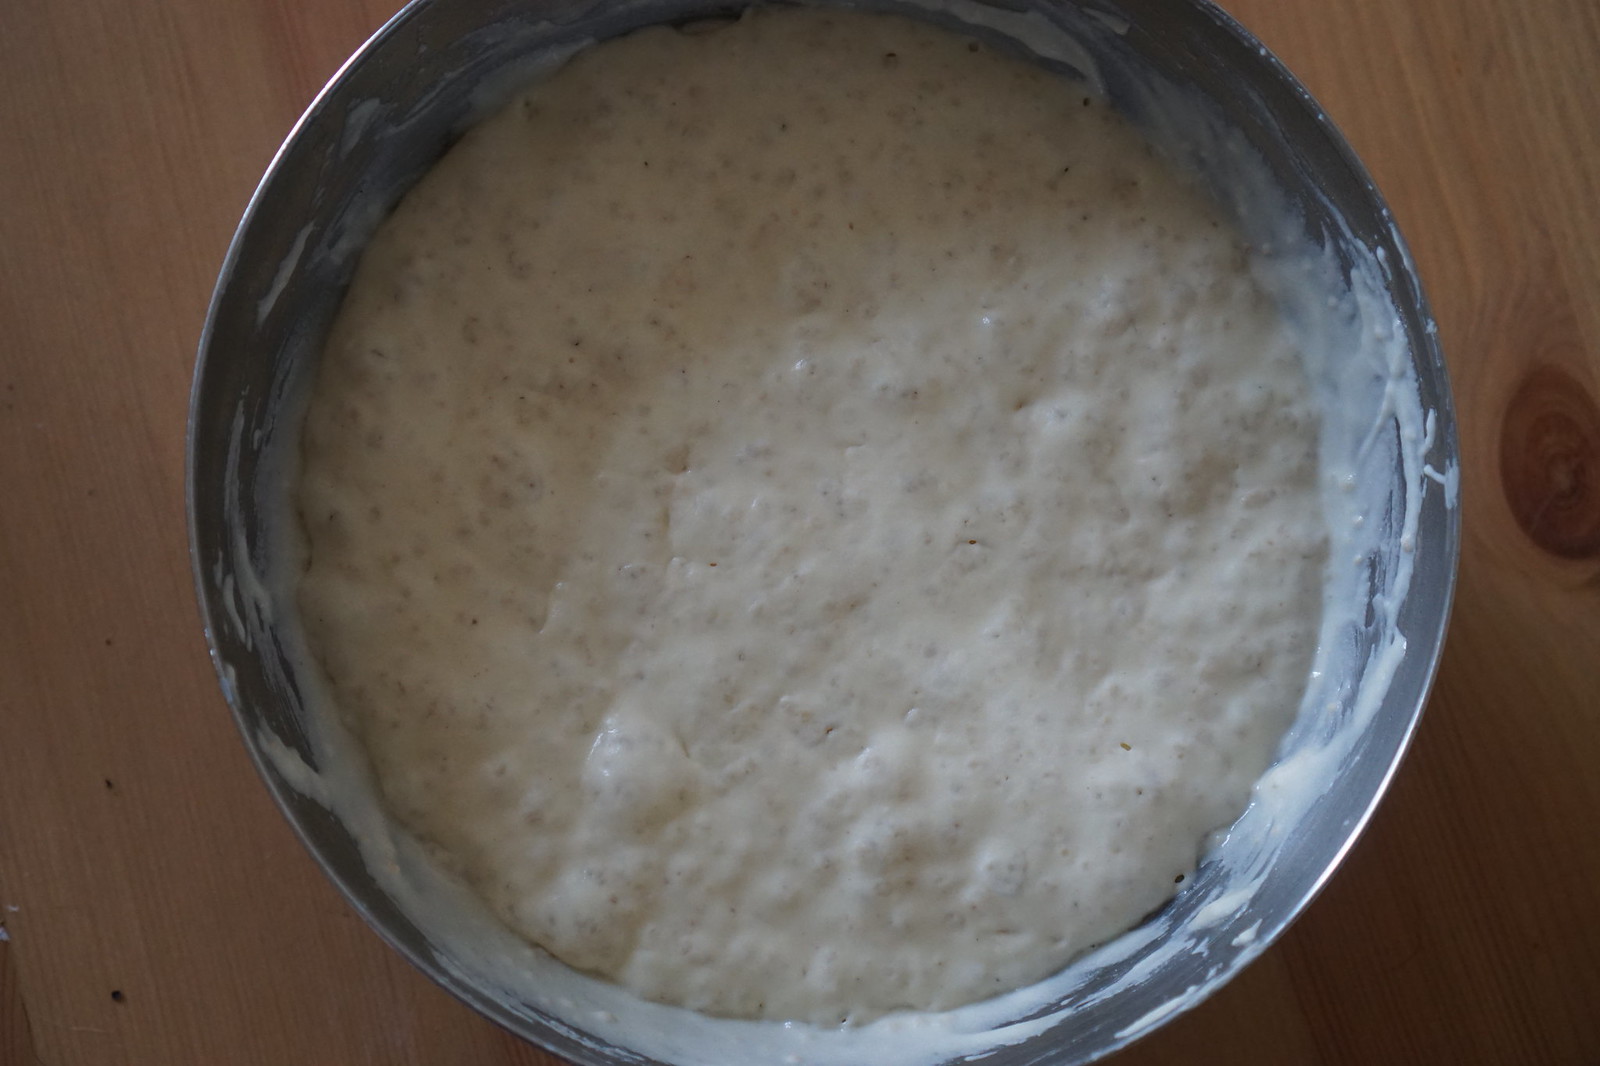 Baked gluten free crumpets making process | yeast risen batter consistency